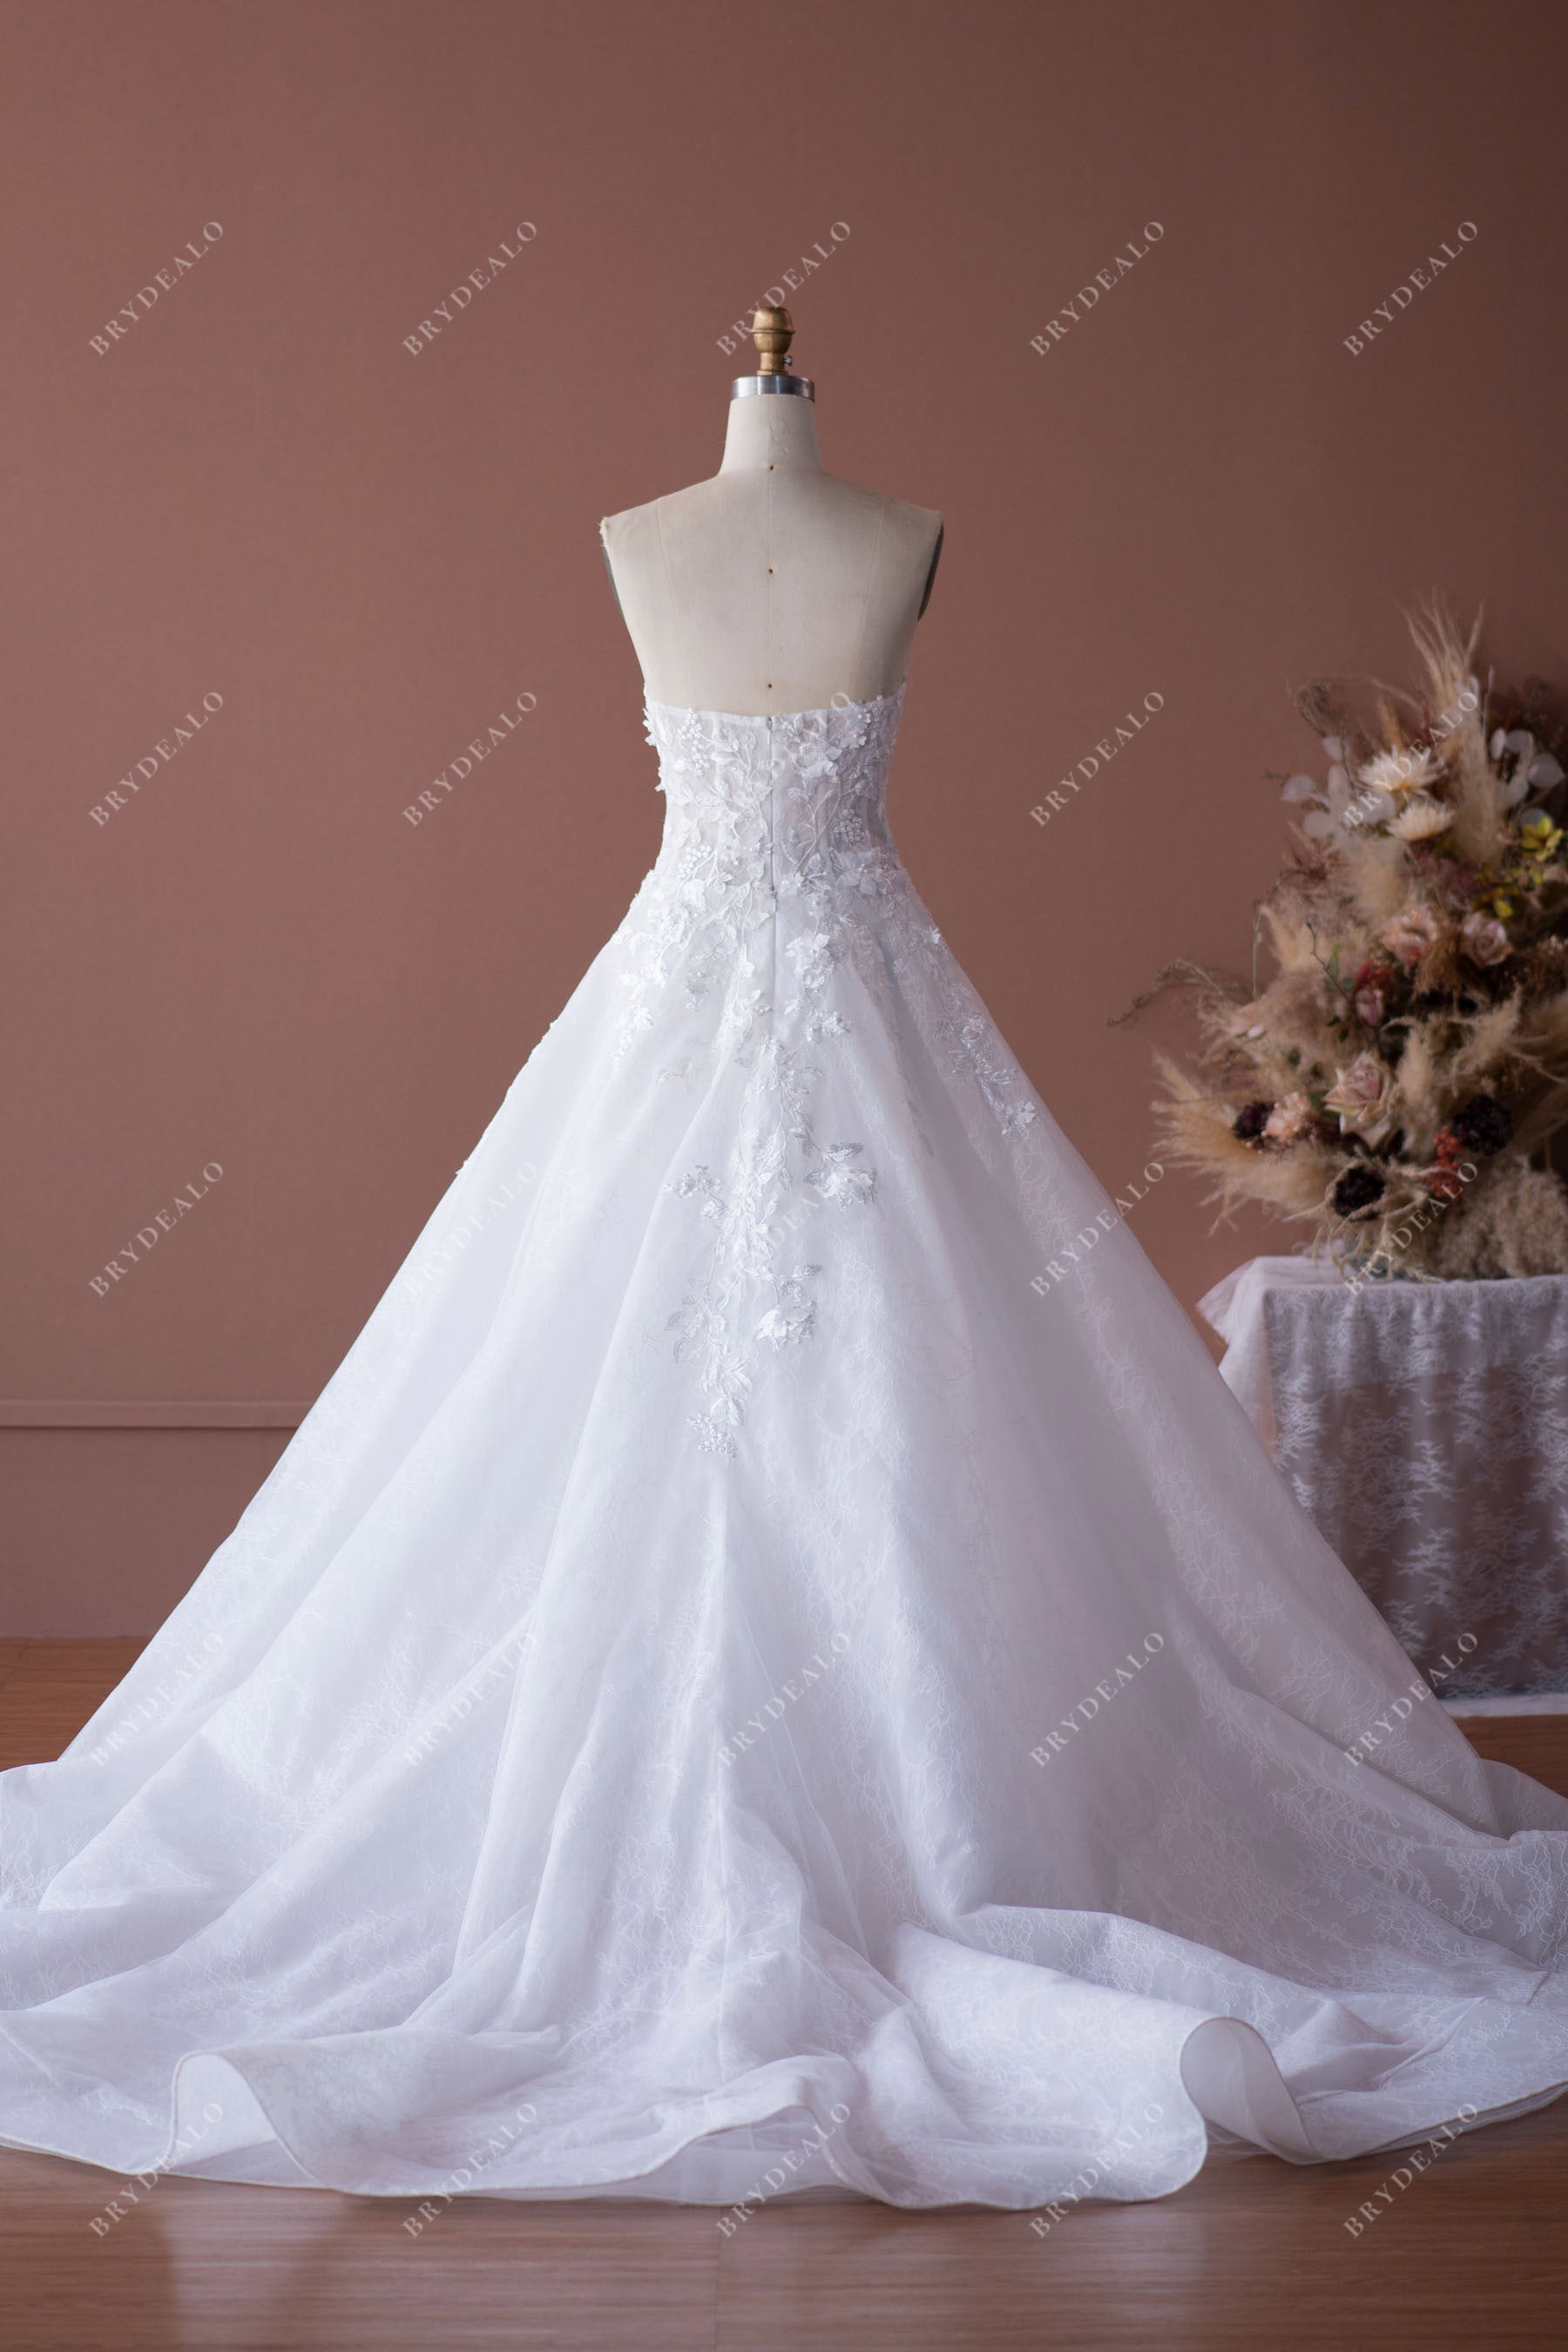 Designer Lace Ball Gown Strapless Wedding Dress